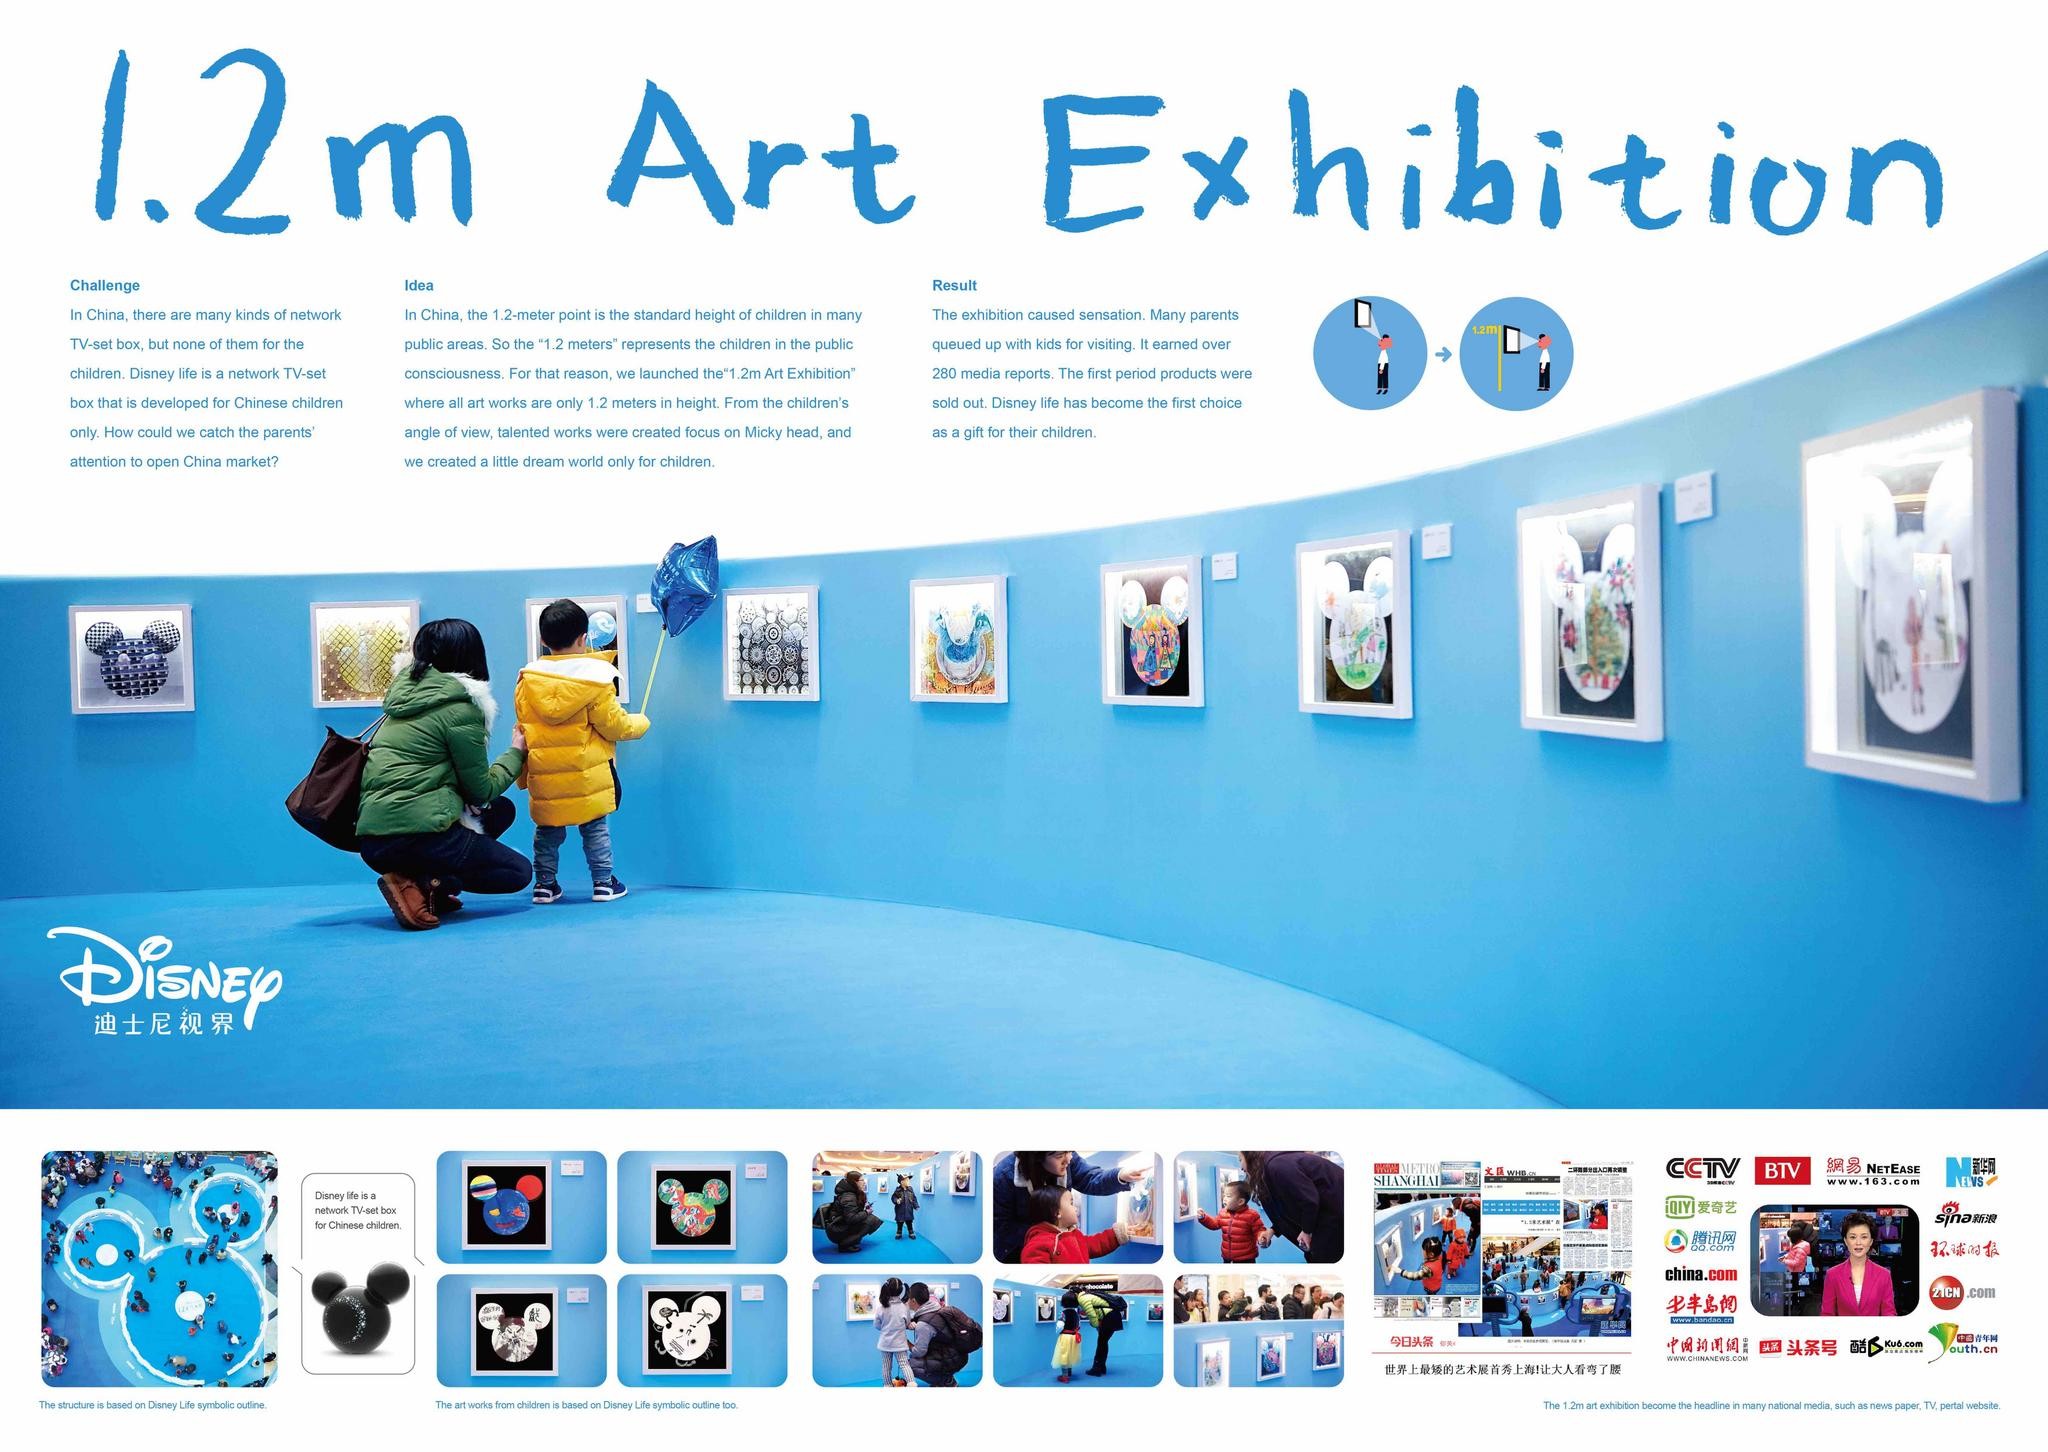 1.2m Art Exhibition